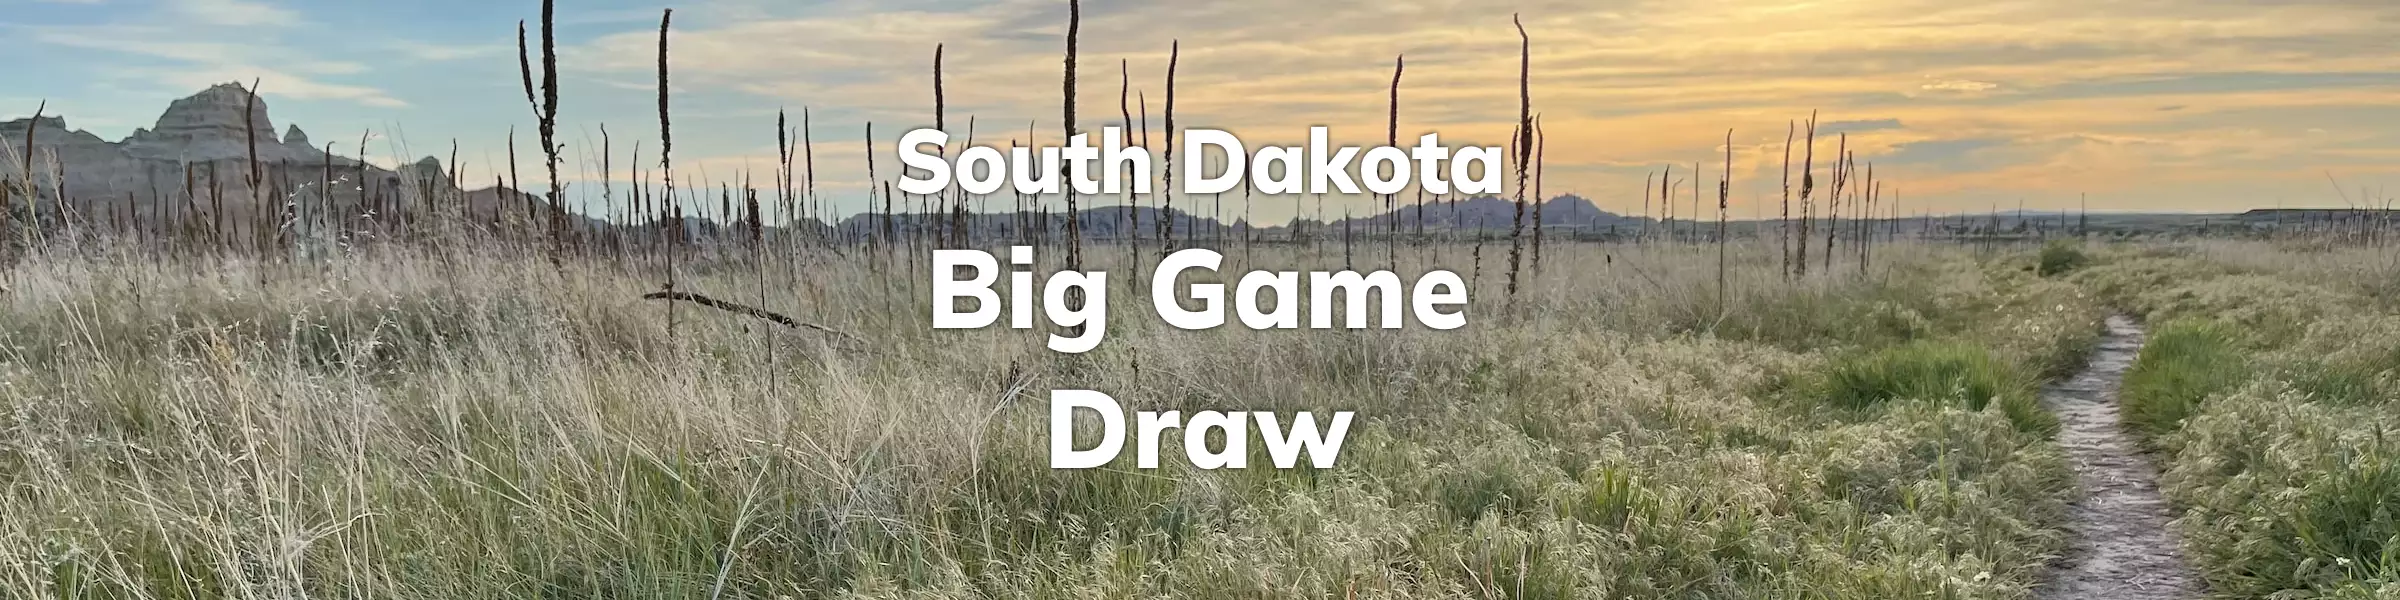 South Dakota Big Game Draw